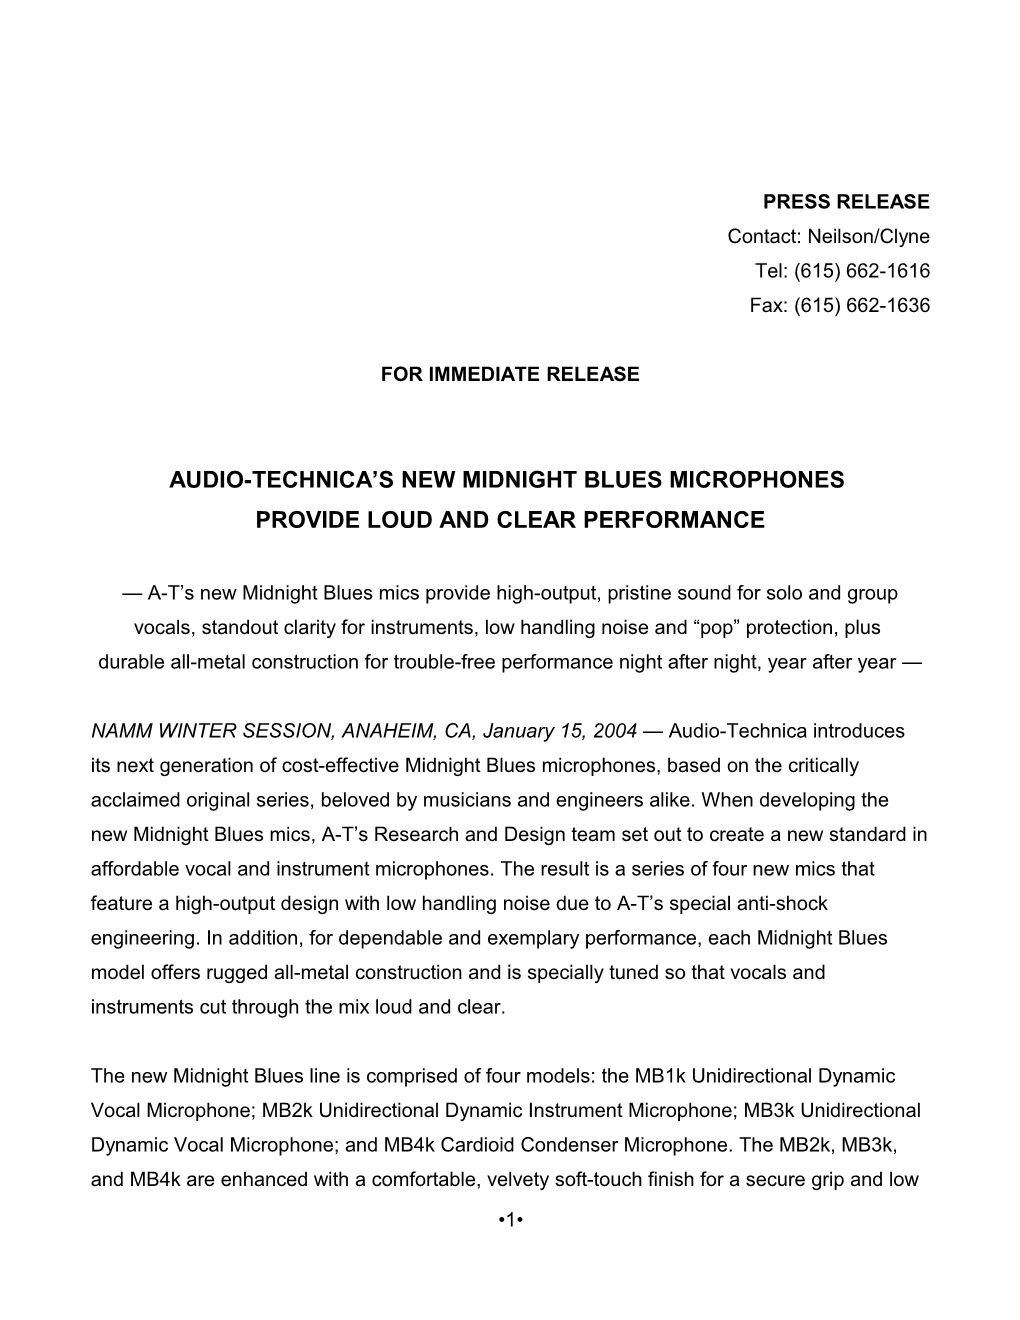 Audio-Technica S New Midnight Blues Microphones